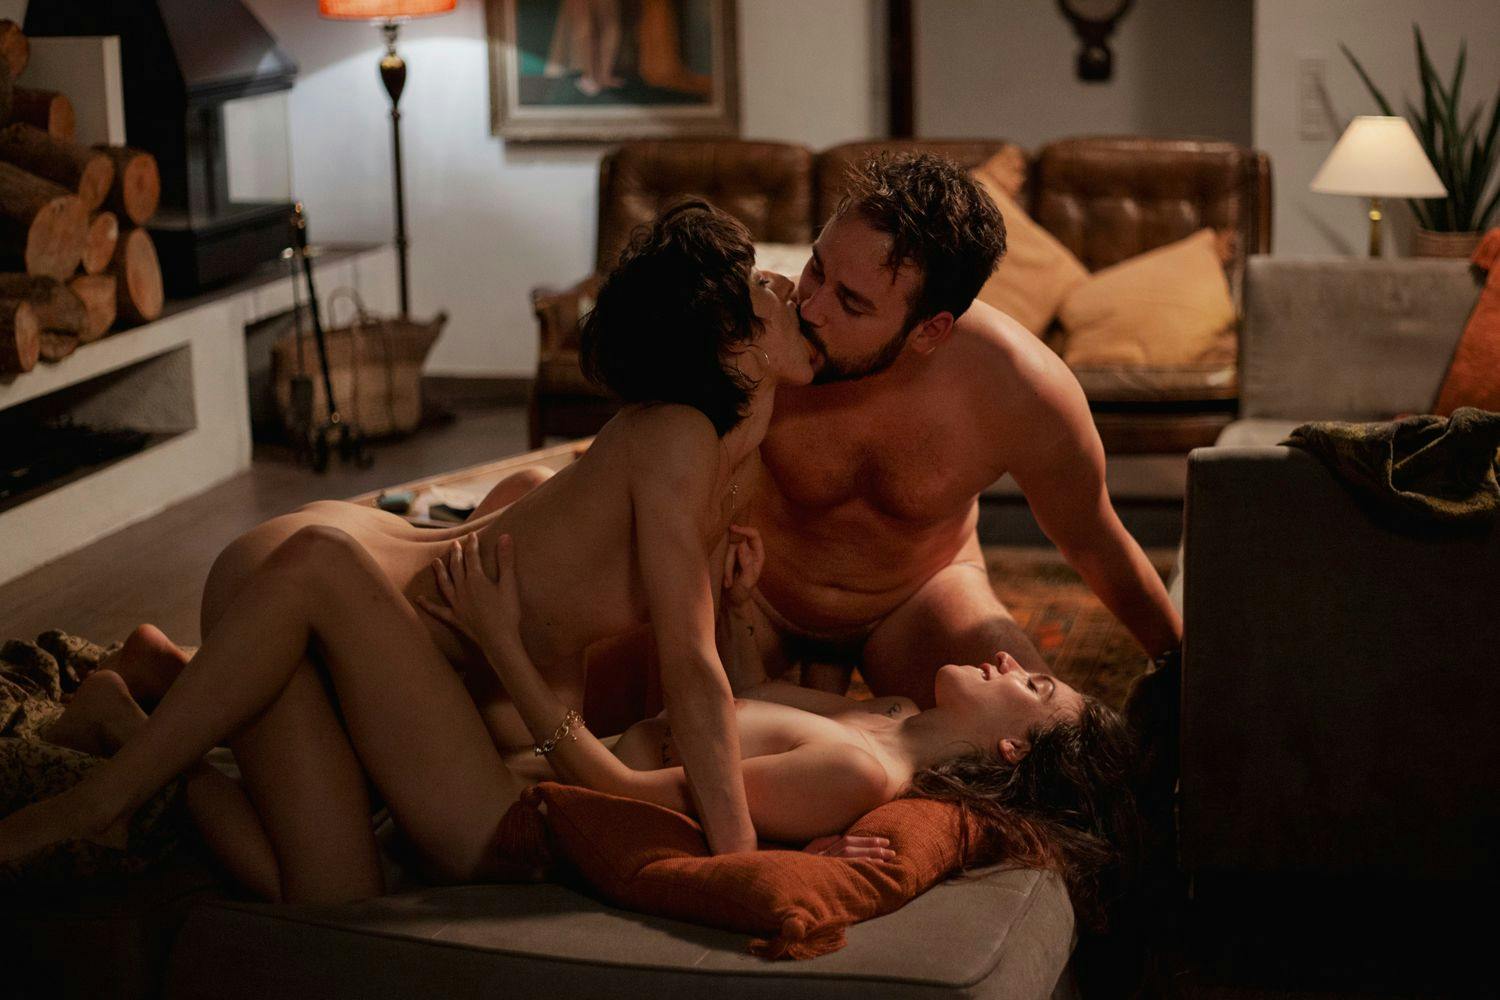 a threesome porn film still from 'Three' on Lust Cinema by Erika Lust